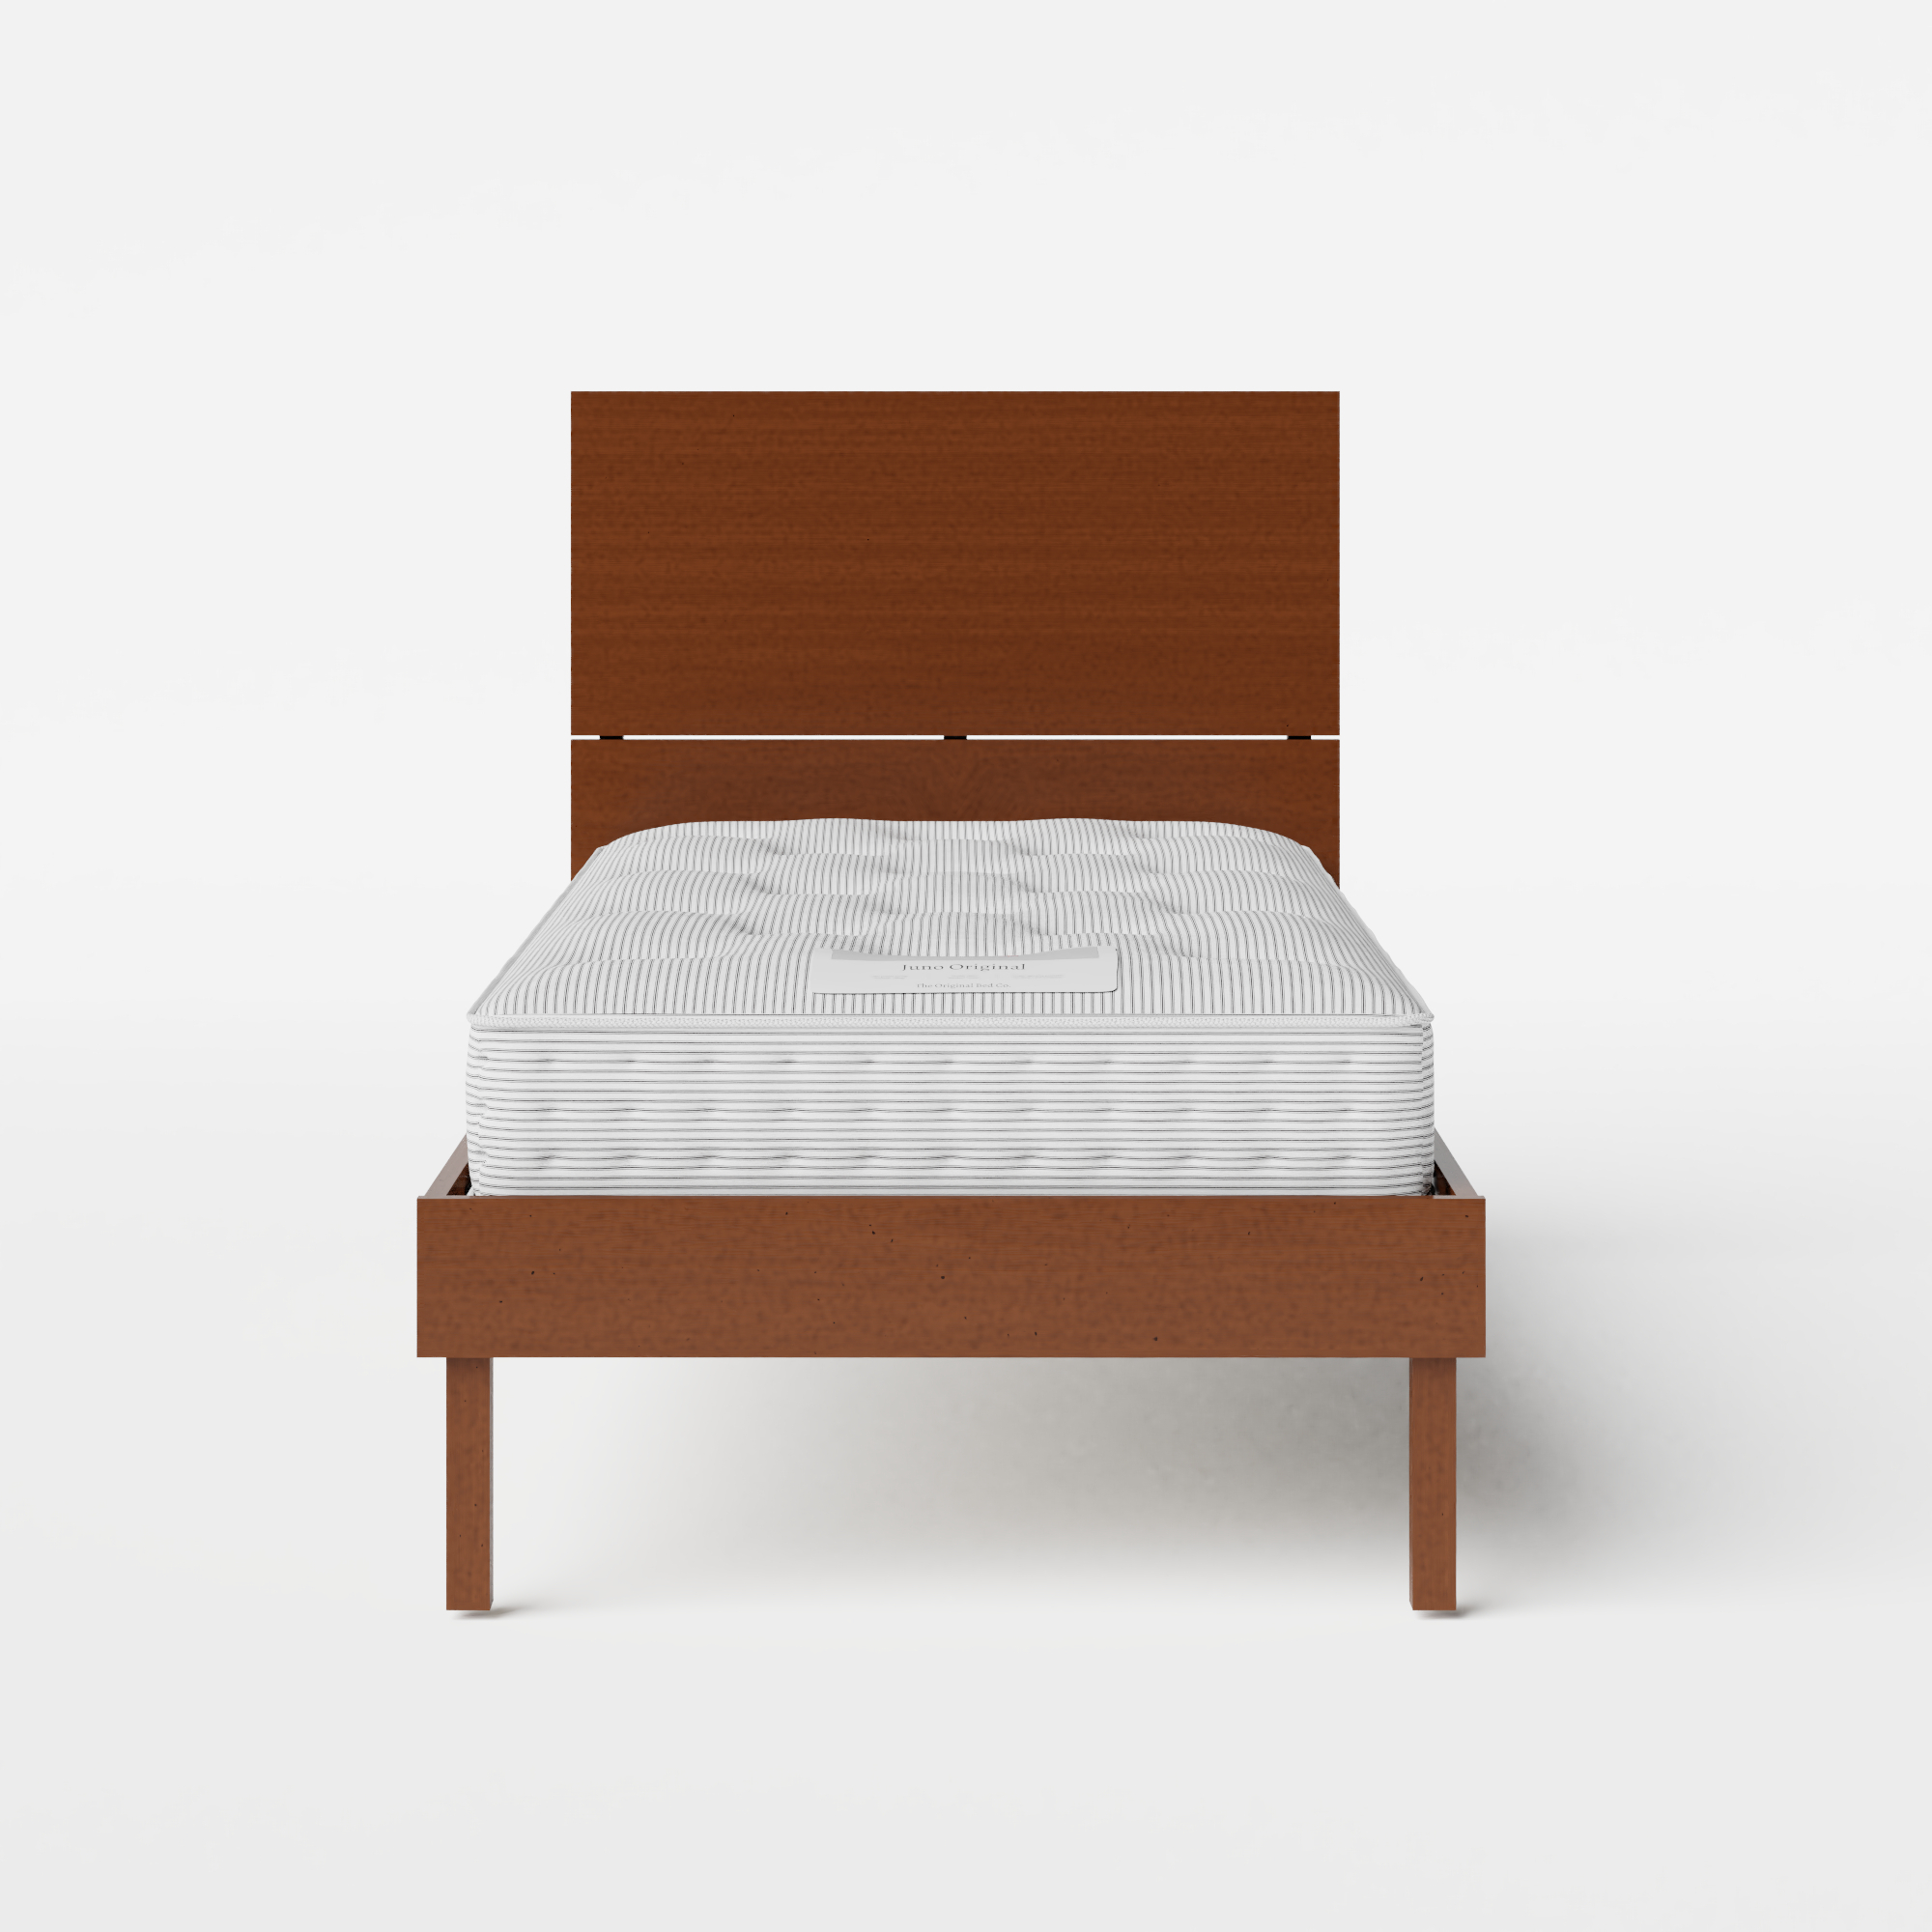 Misaki single wood bed in dark cherry with Juno mattress